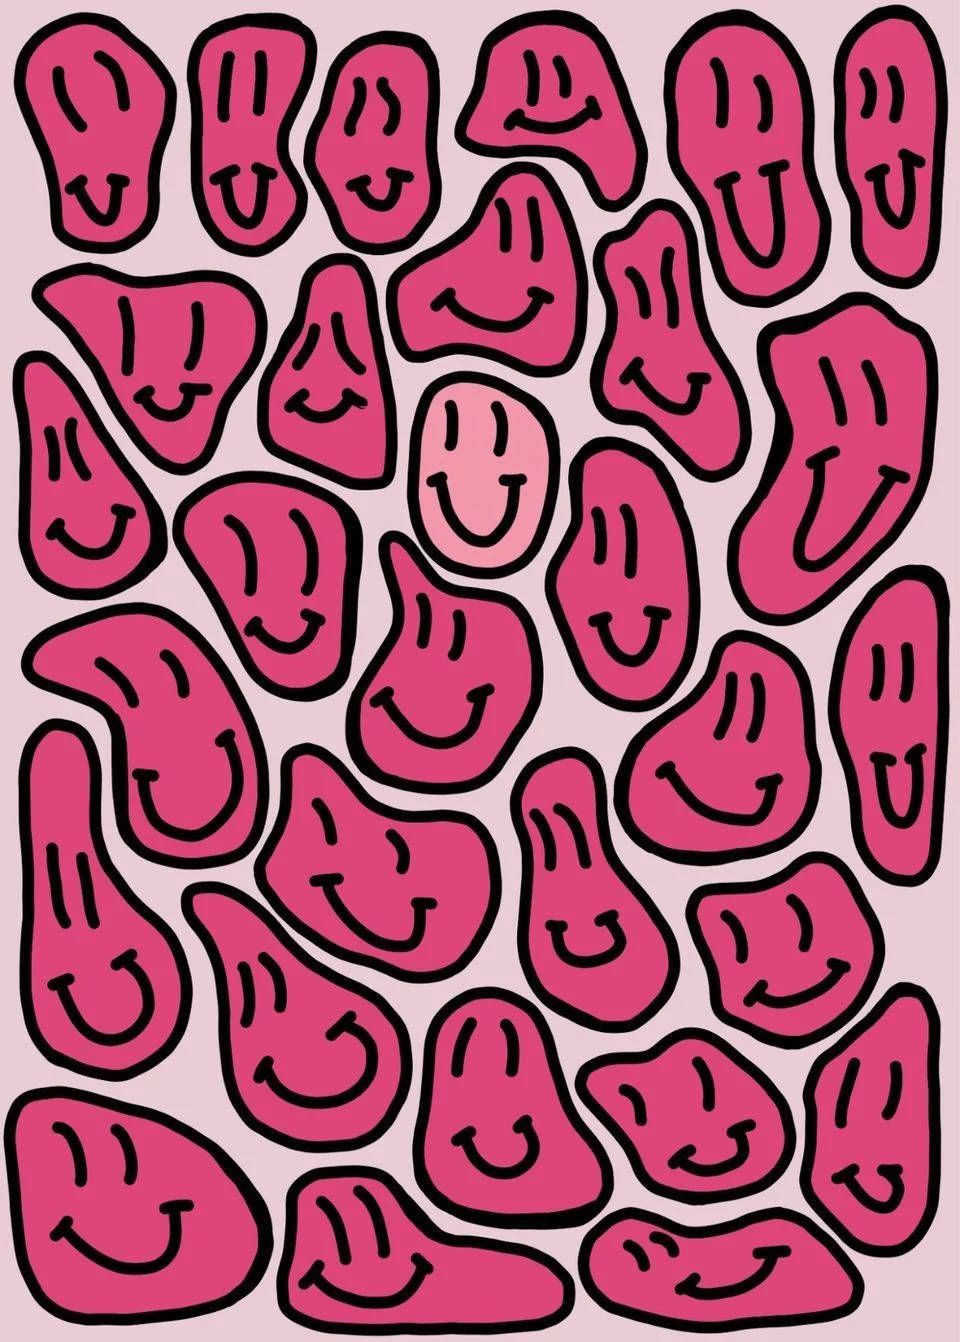 Preppy Smiley Face Pink Doodles Background